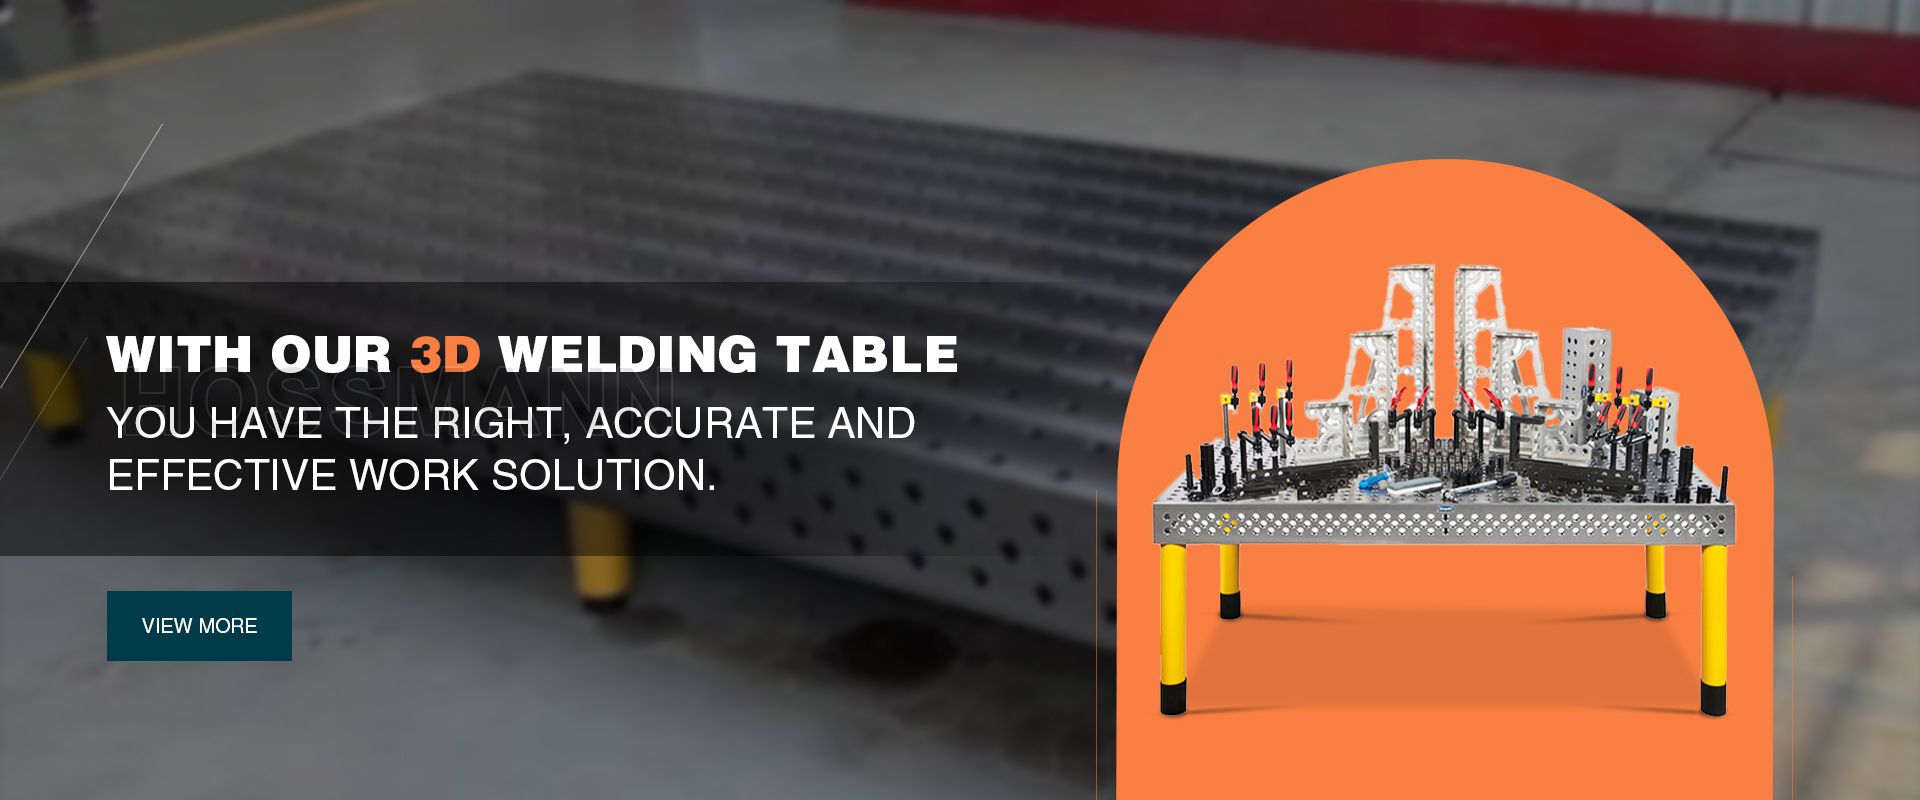 3D Welding Table For Pipe Welding